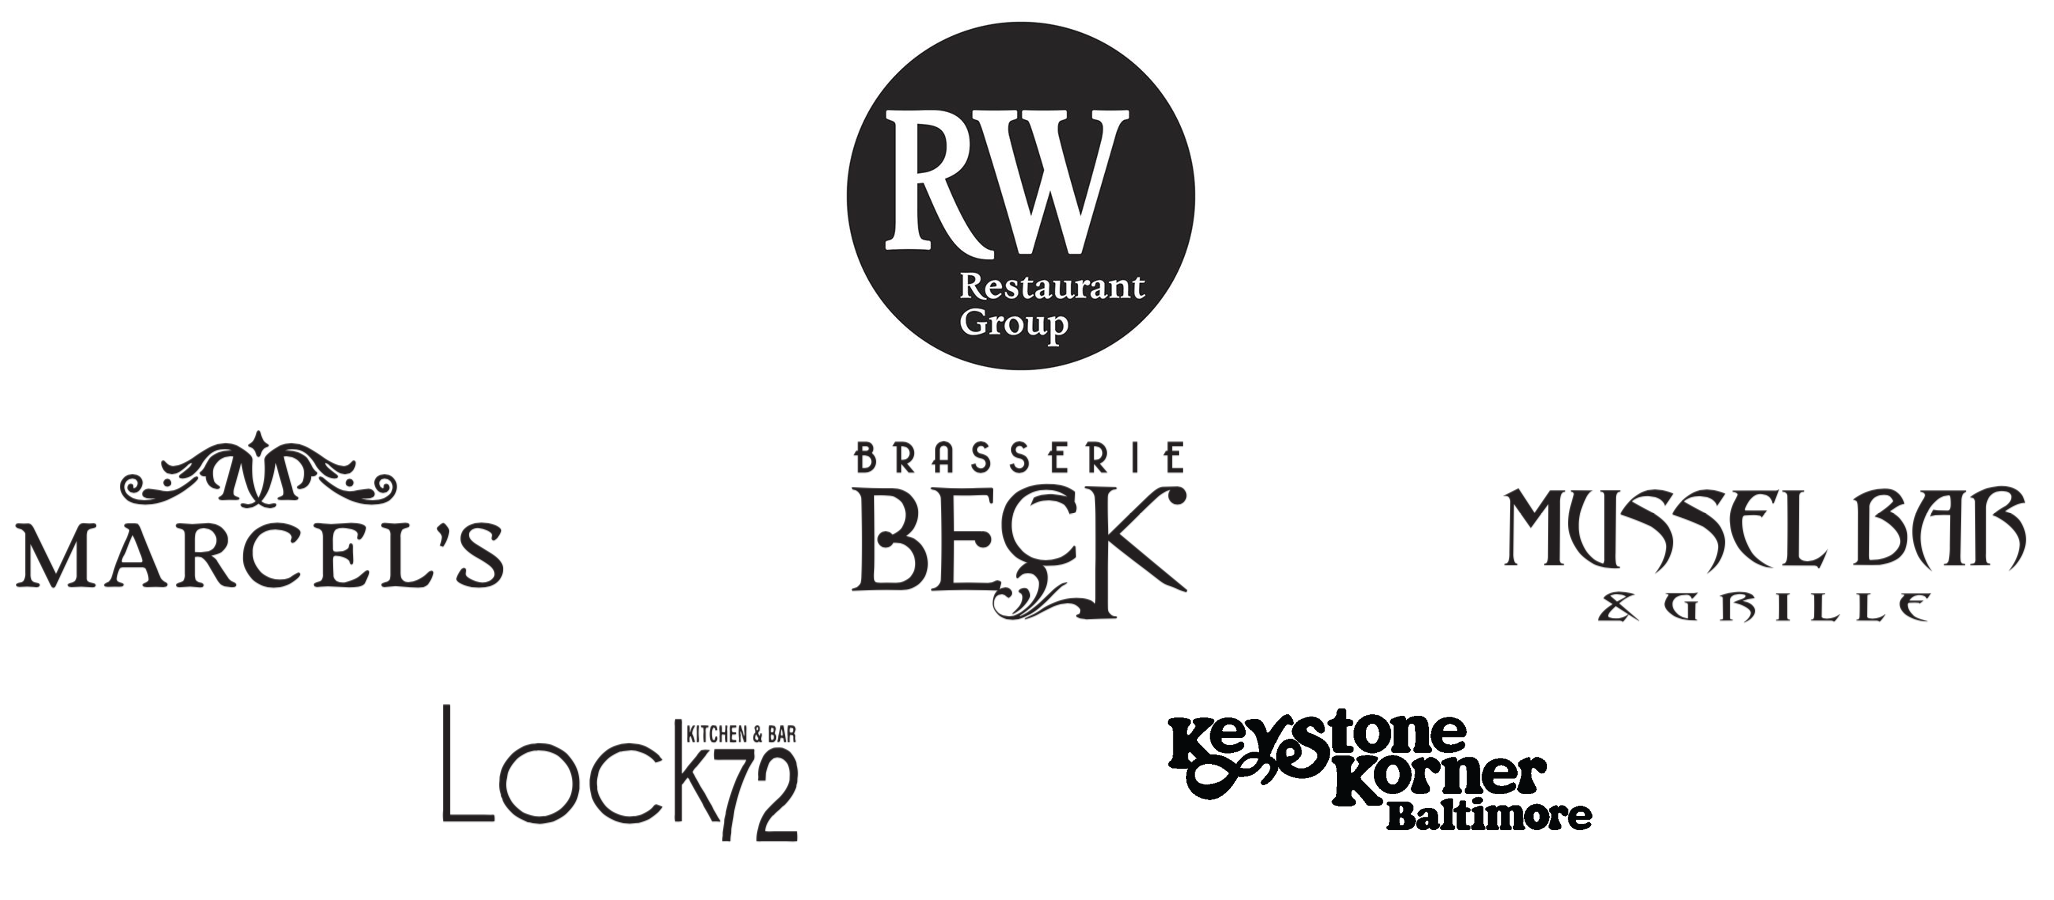 RW Restaurant Group Logo